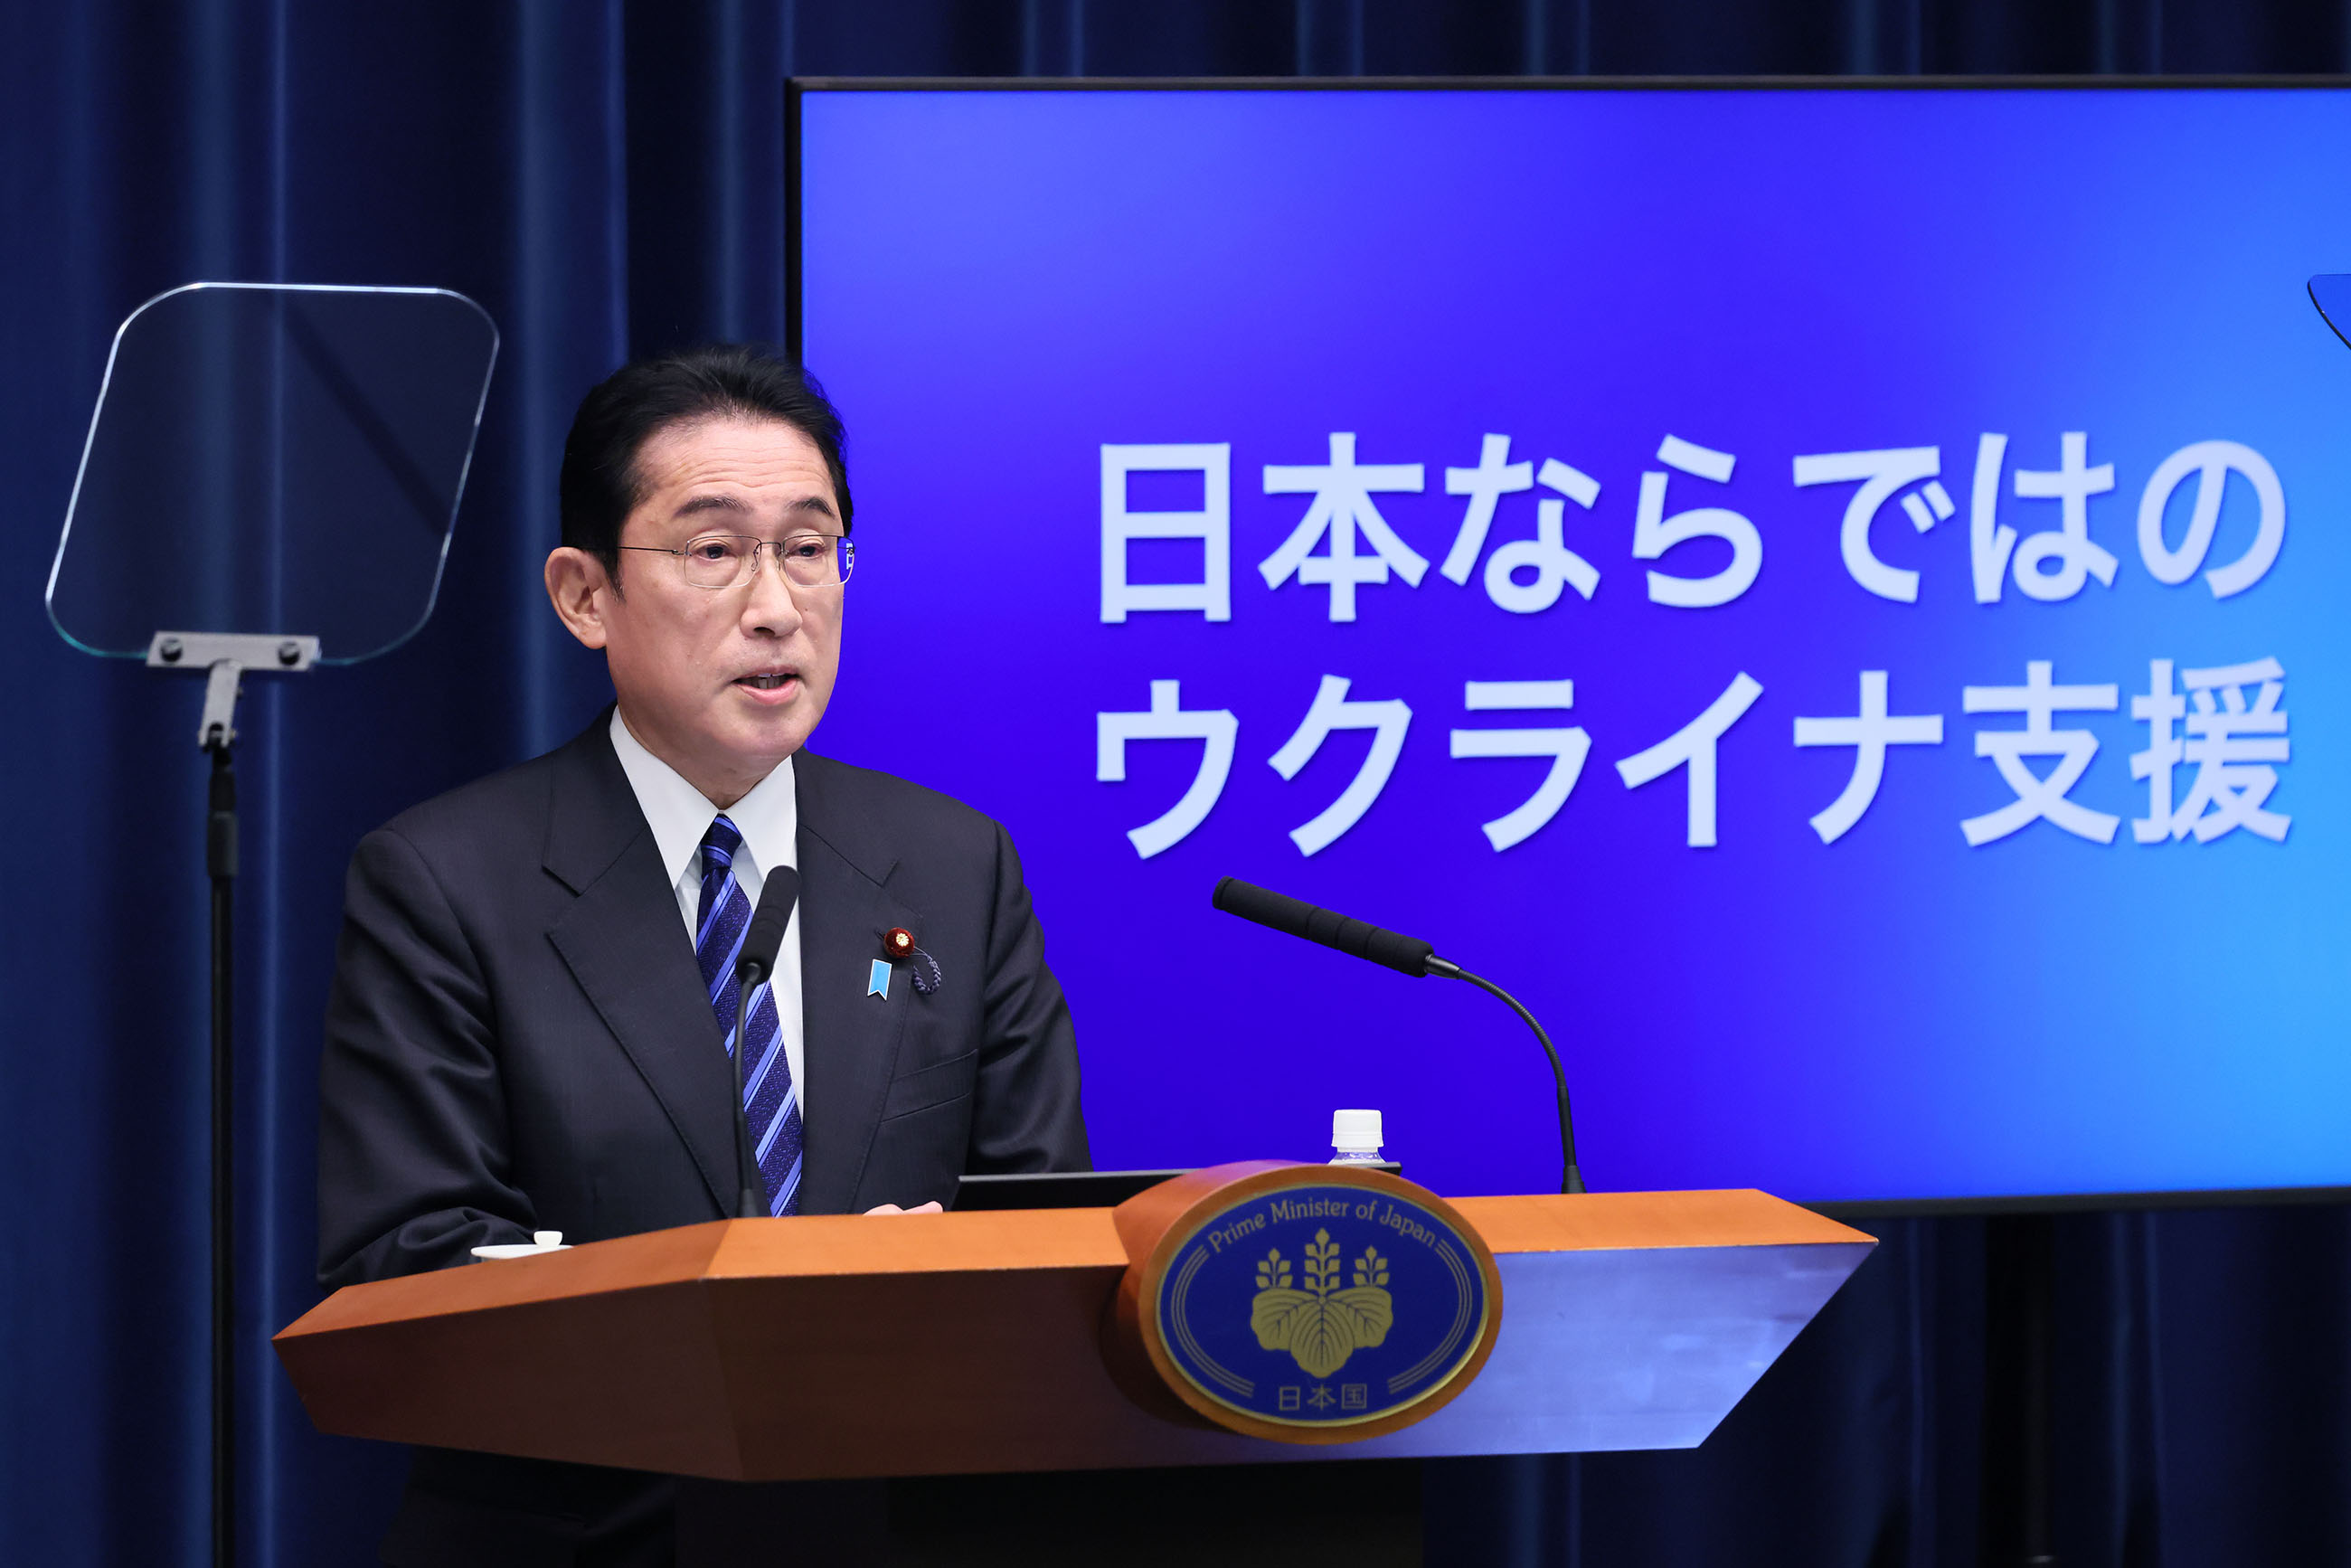 Prime Minister Kishida making an opening statement (9)